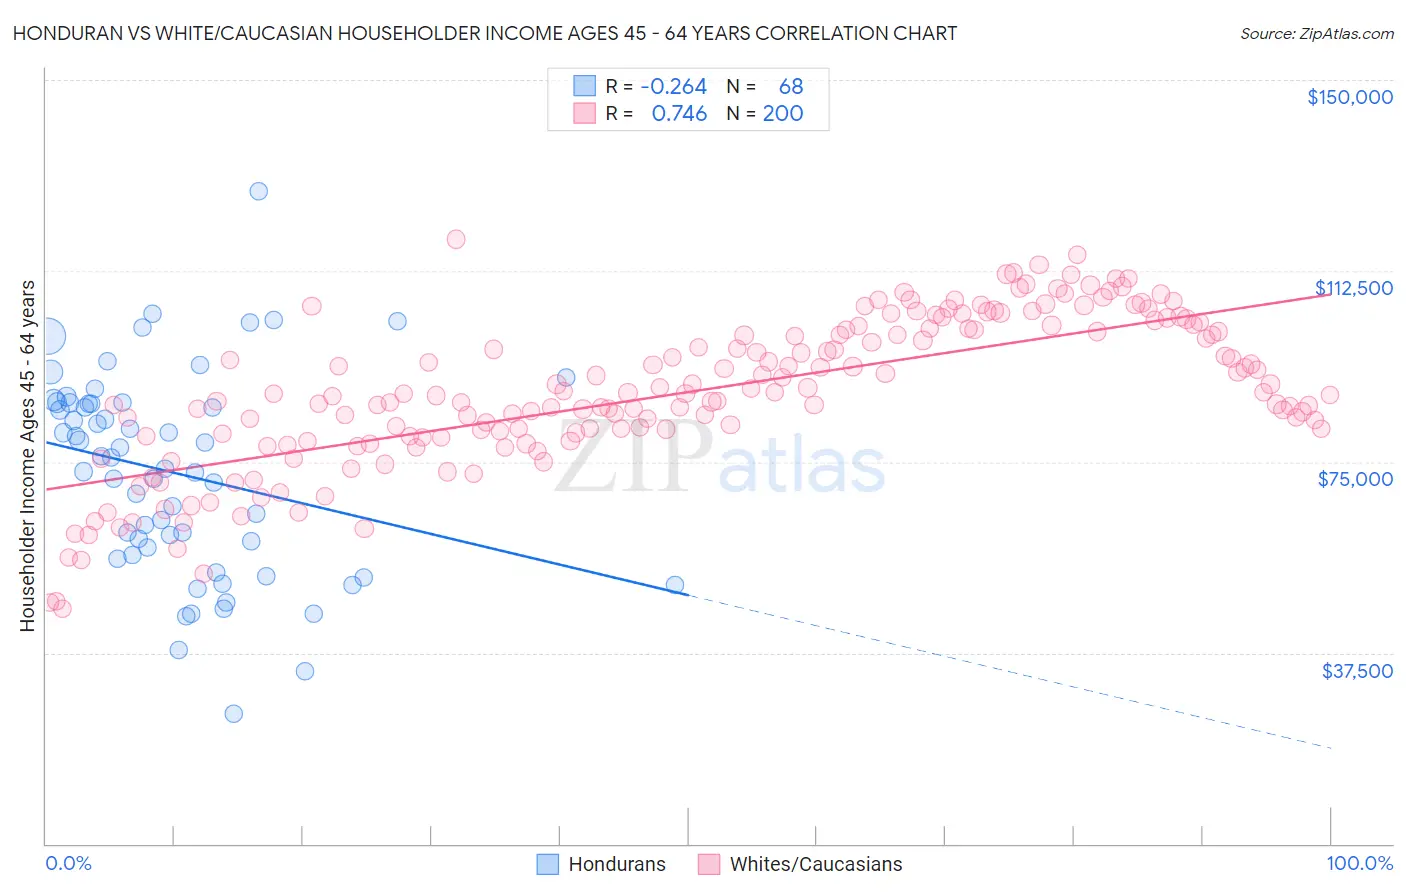 Honduran vs White/Caucasian Householder Income Ages 45 - 64 years